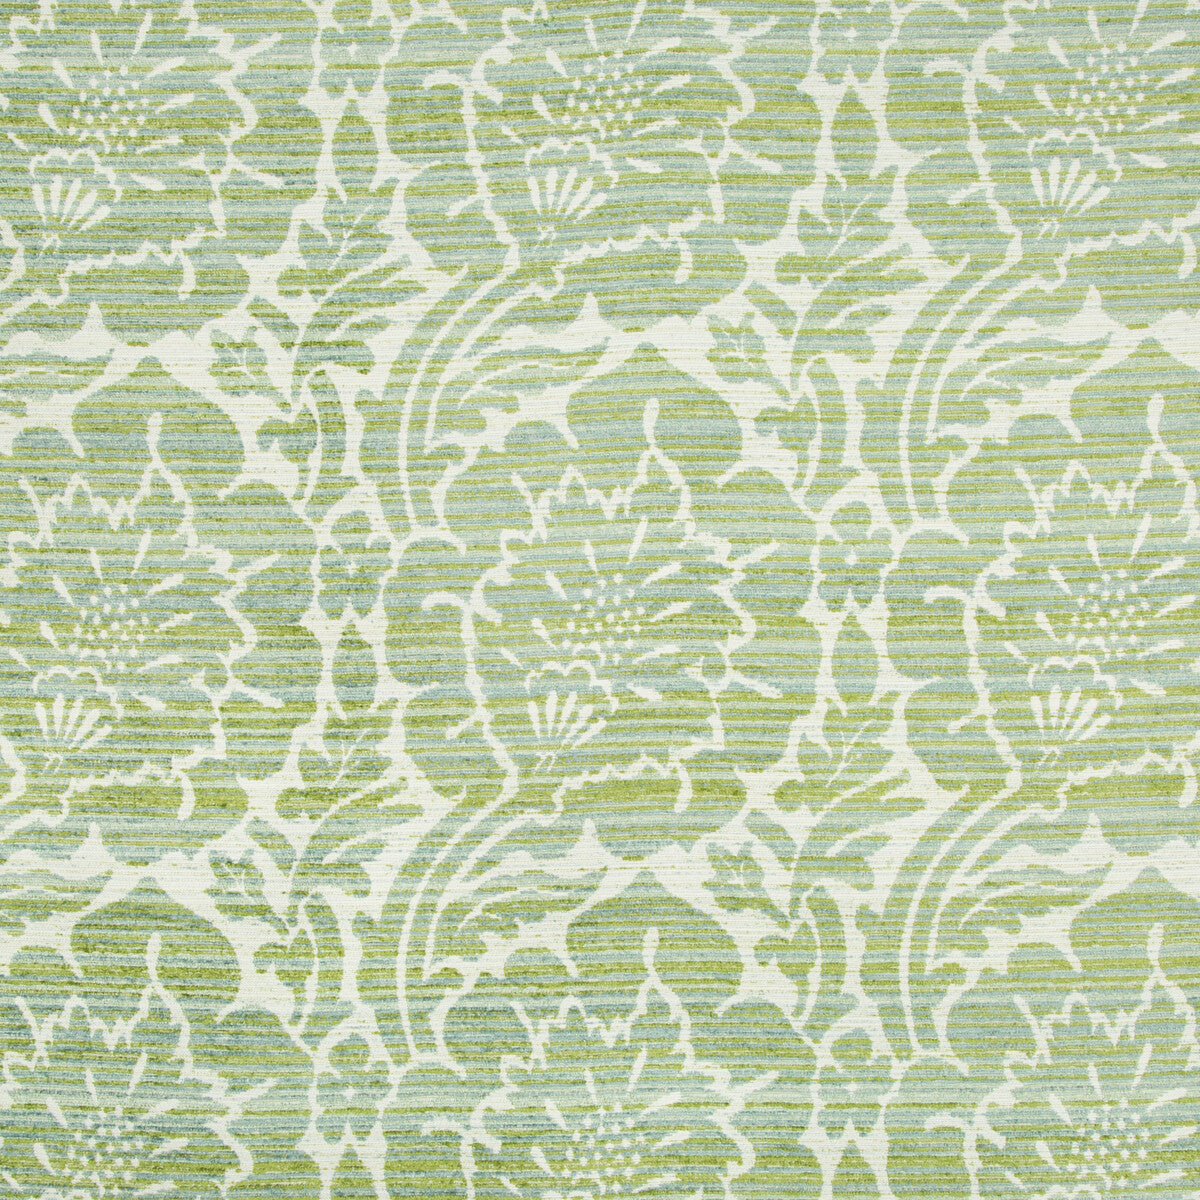 Kravet Design fabric in 34712-23 color - pattern 34712.23.0 - by Kravet Design in the Gis collection